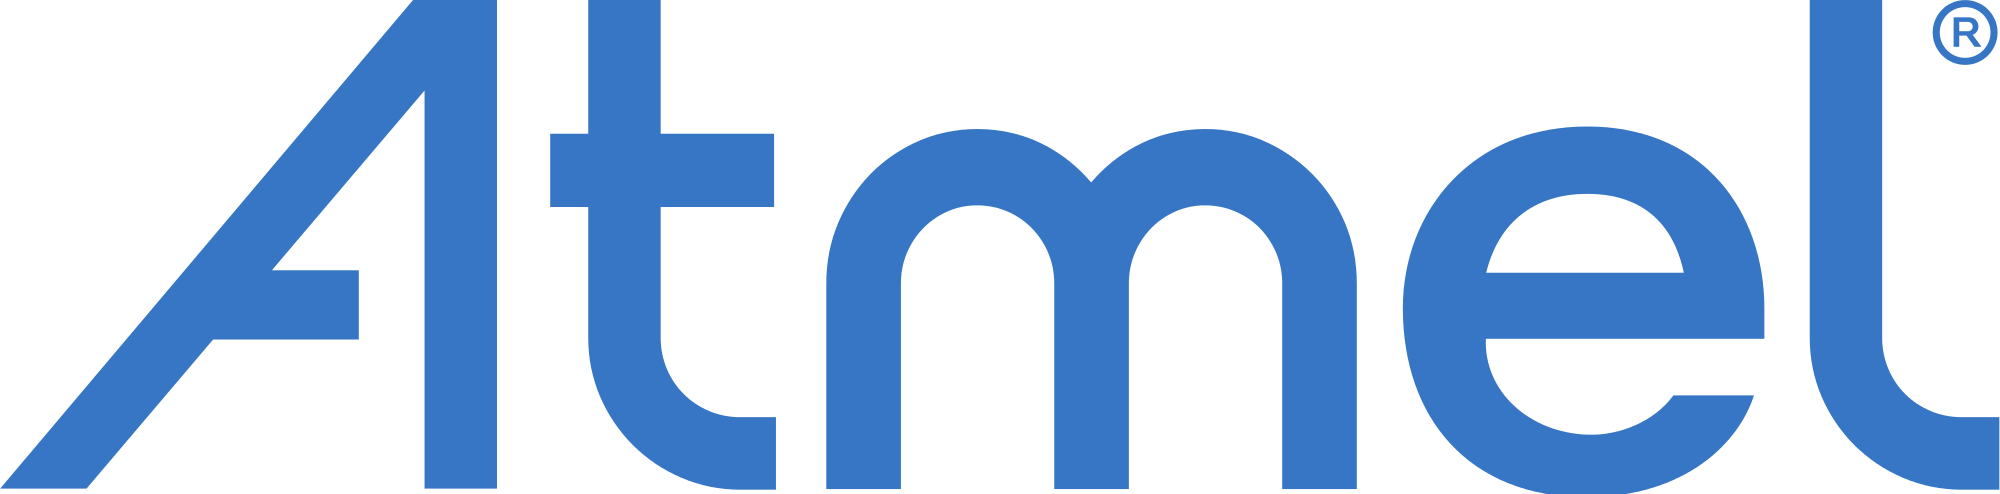 atmel_logo